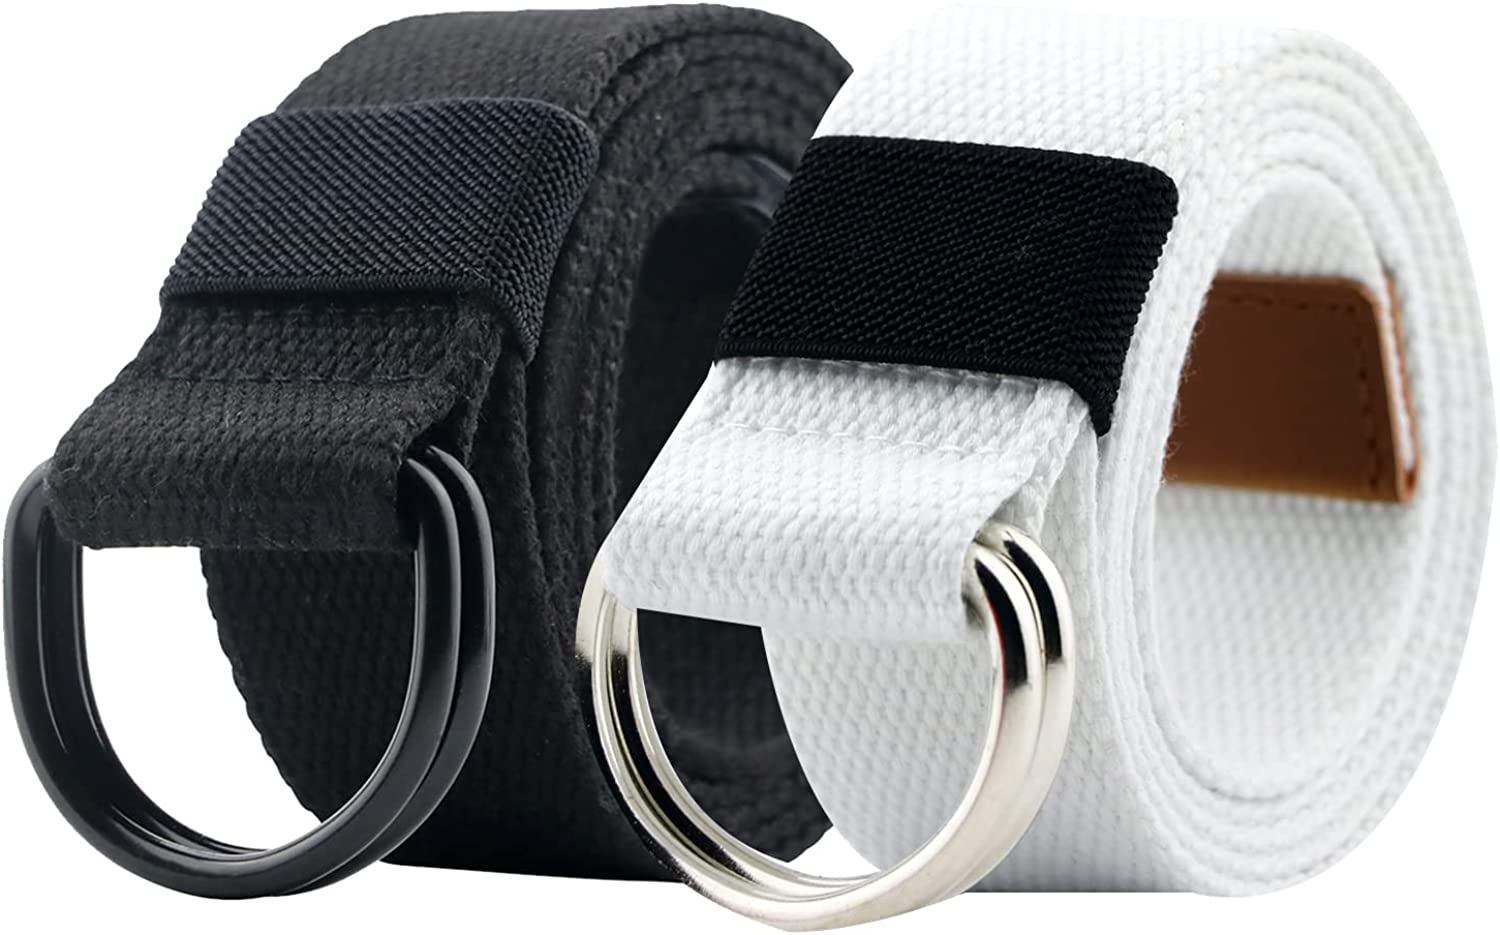 Buy Canvas Belt, Web Belt for Men/Women with Metal Double D Ring